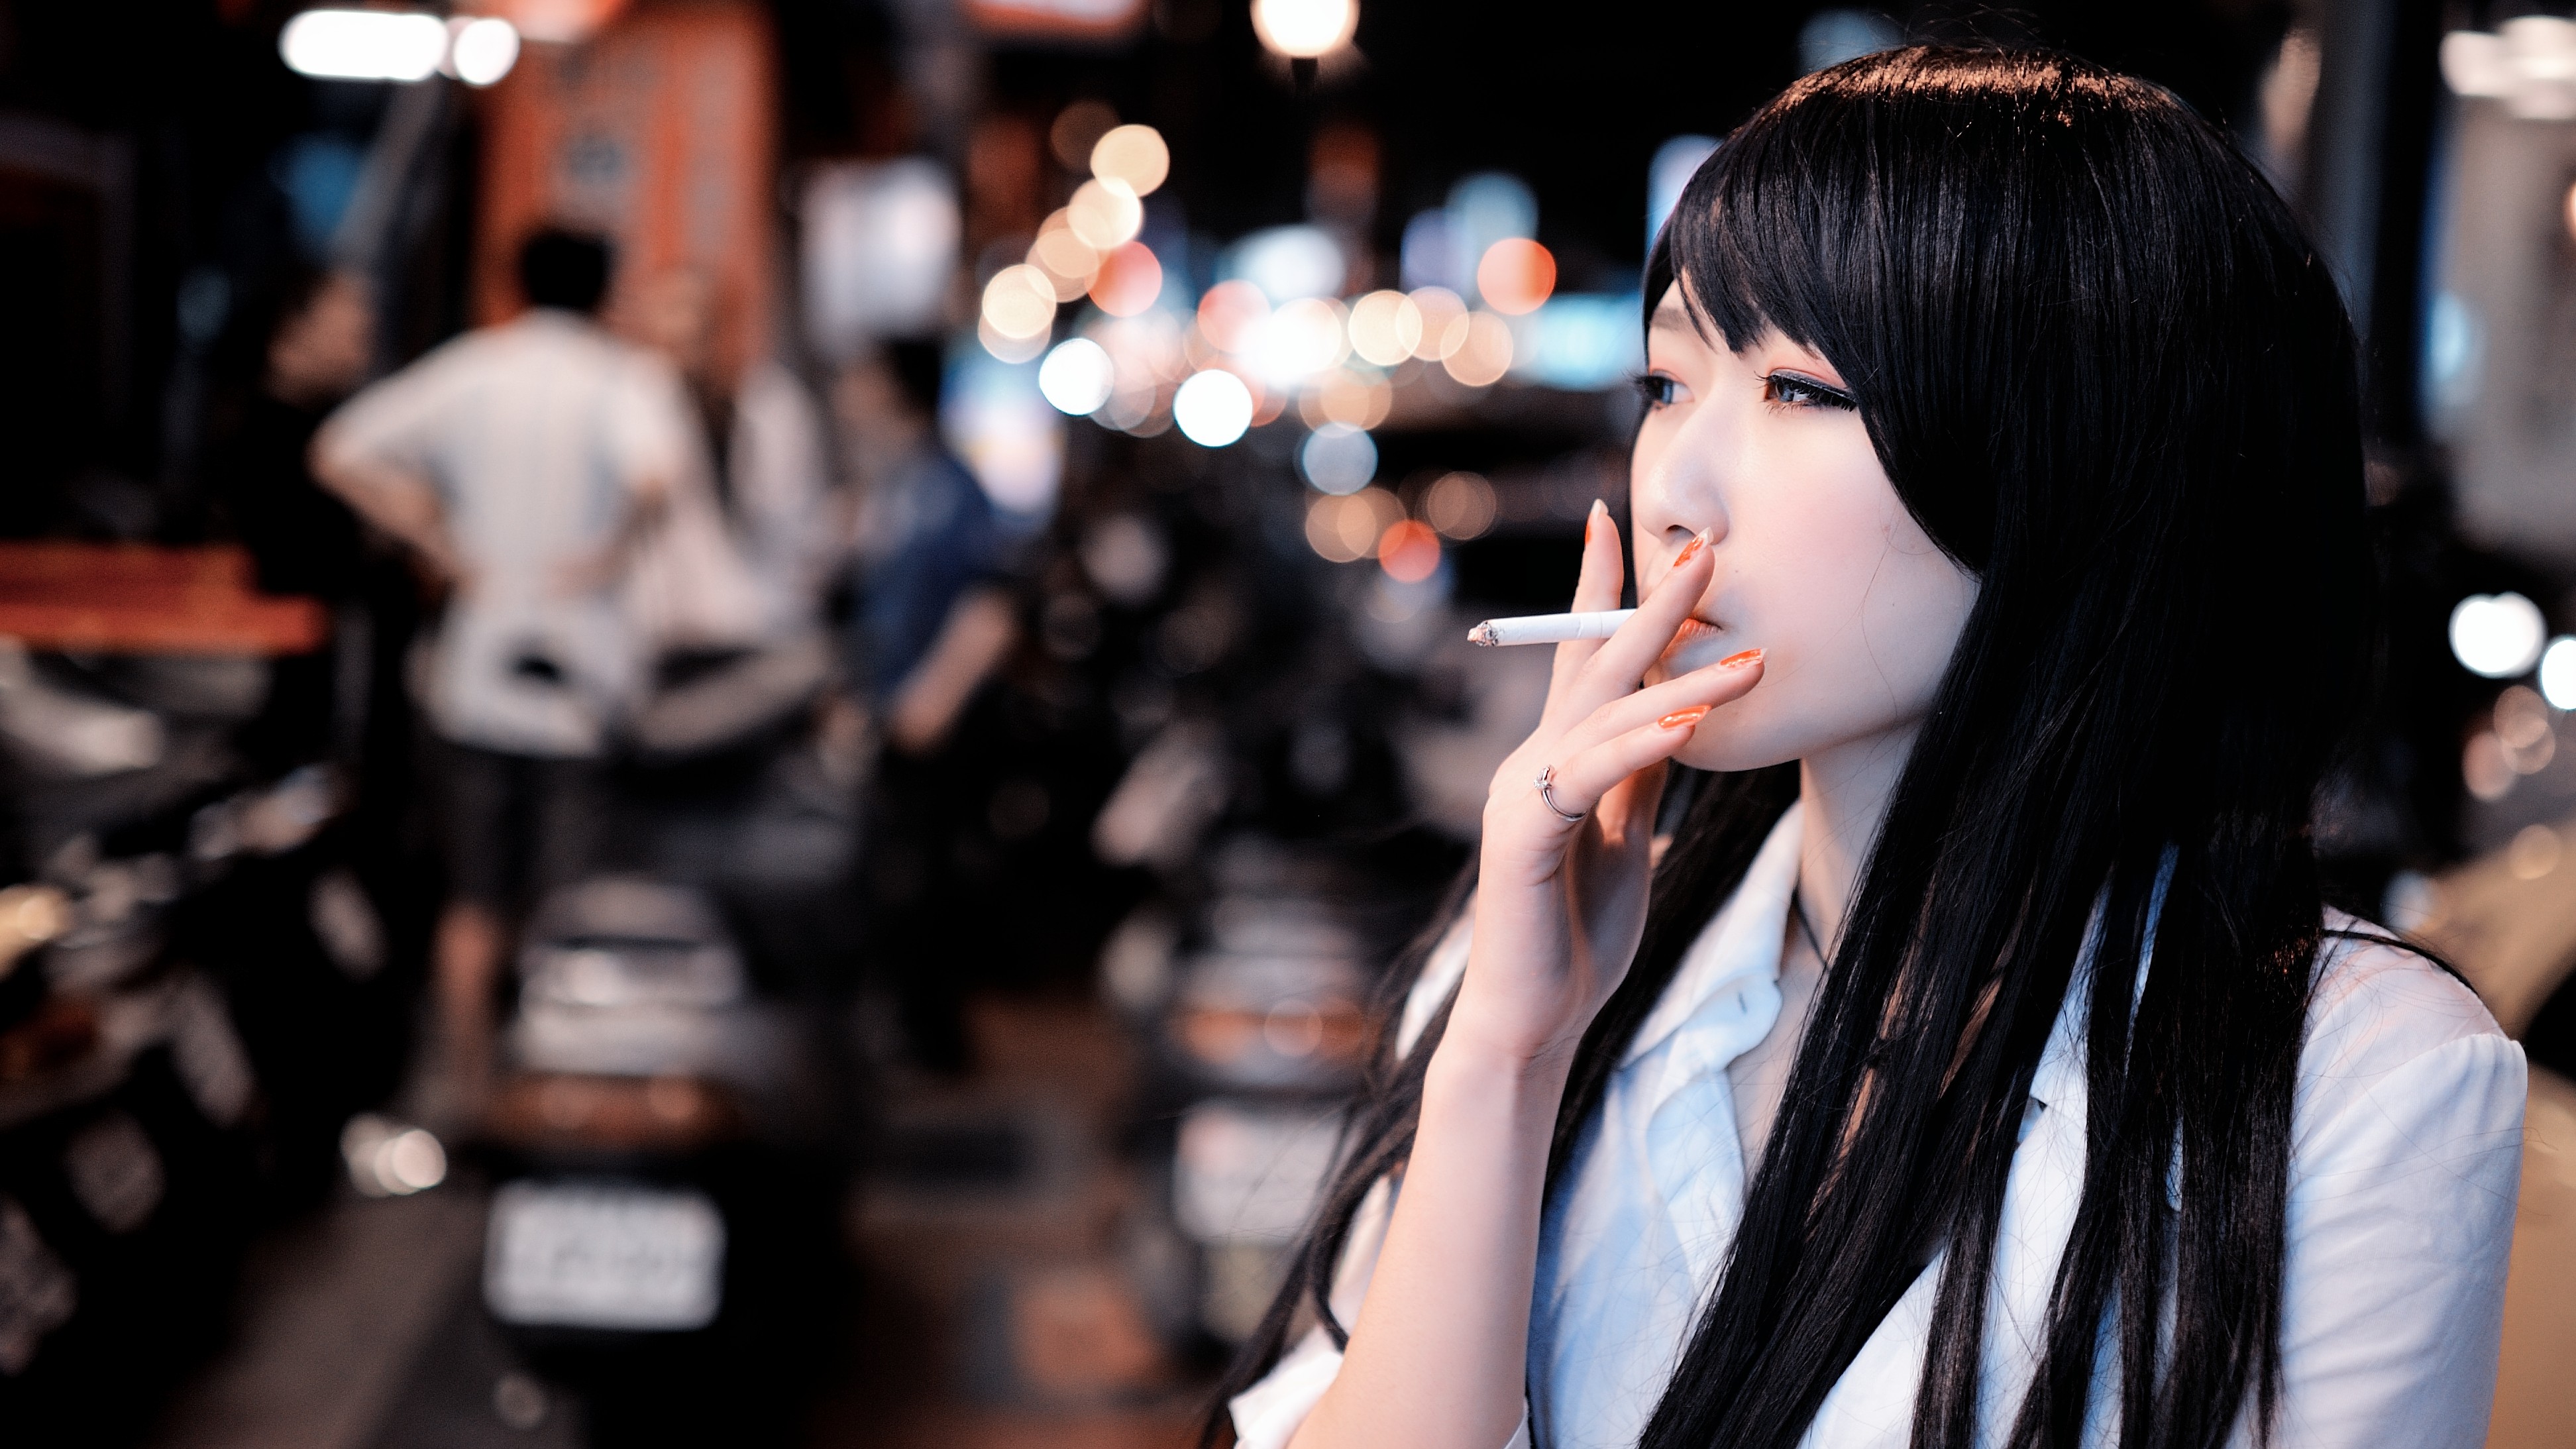 People 3888x2187 cigarettes smoking looking away long hair women Asian model black hair orange nails painted nails urban